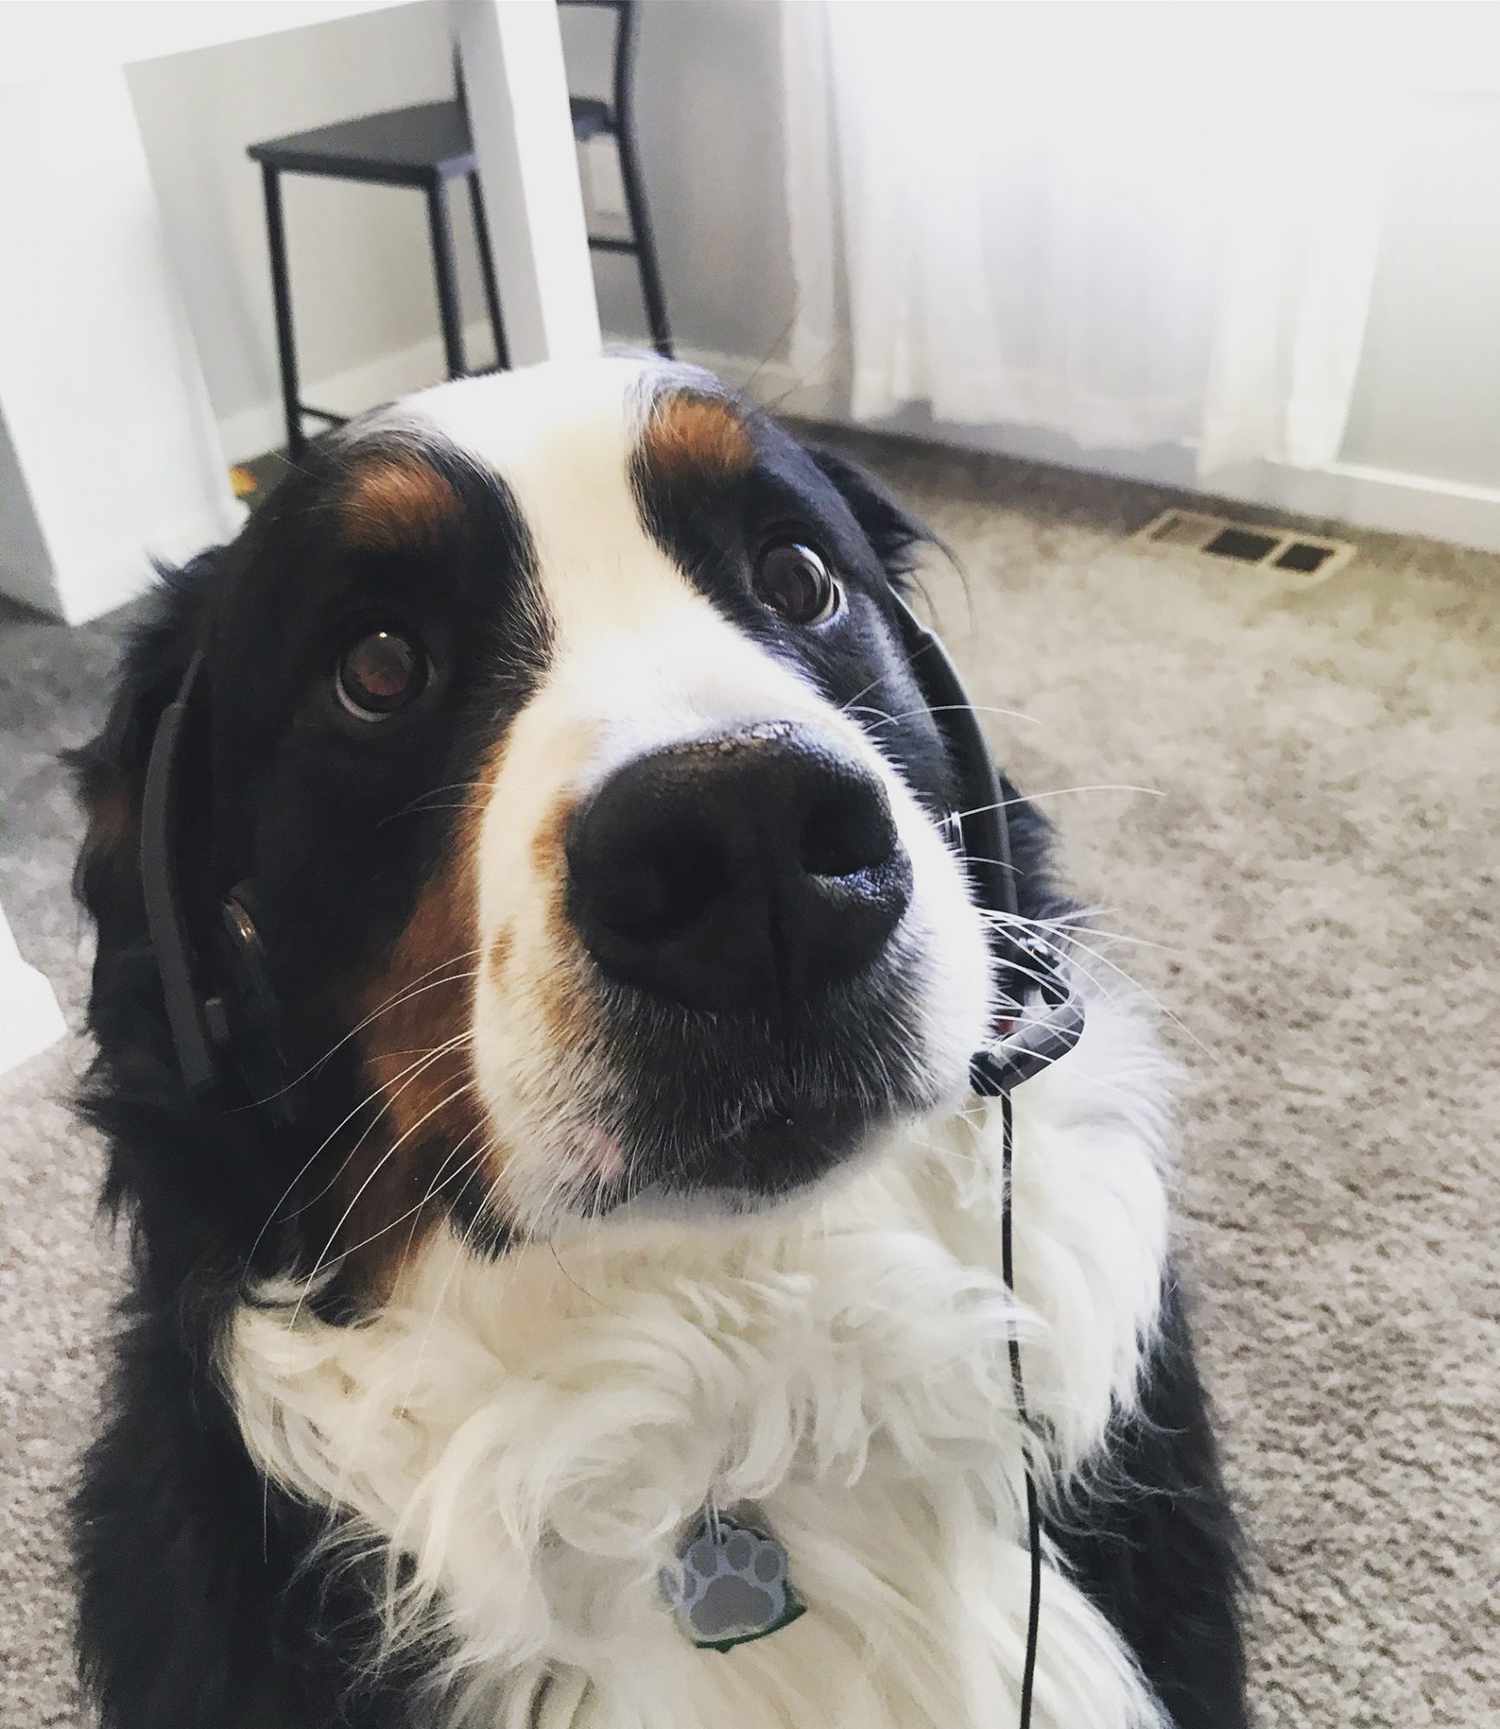 Cute dog wearing headphones